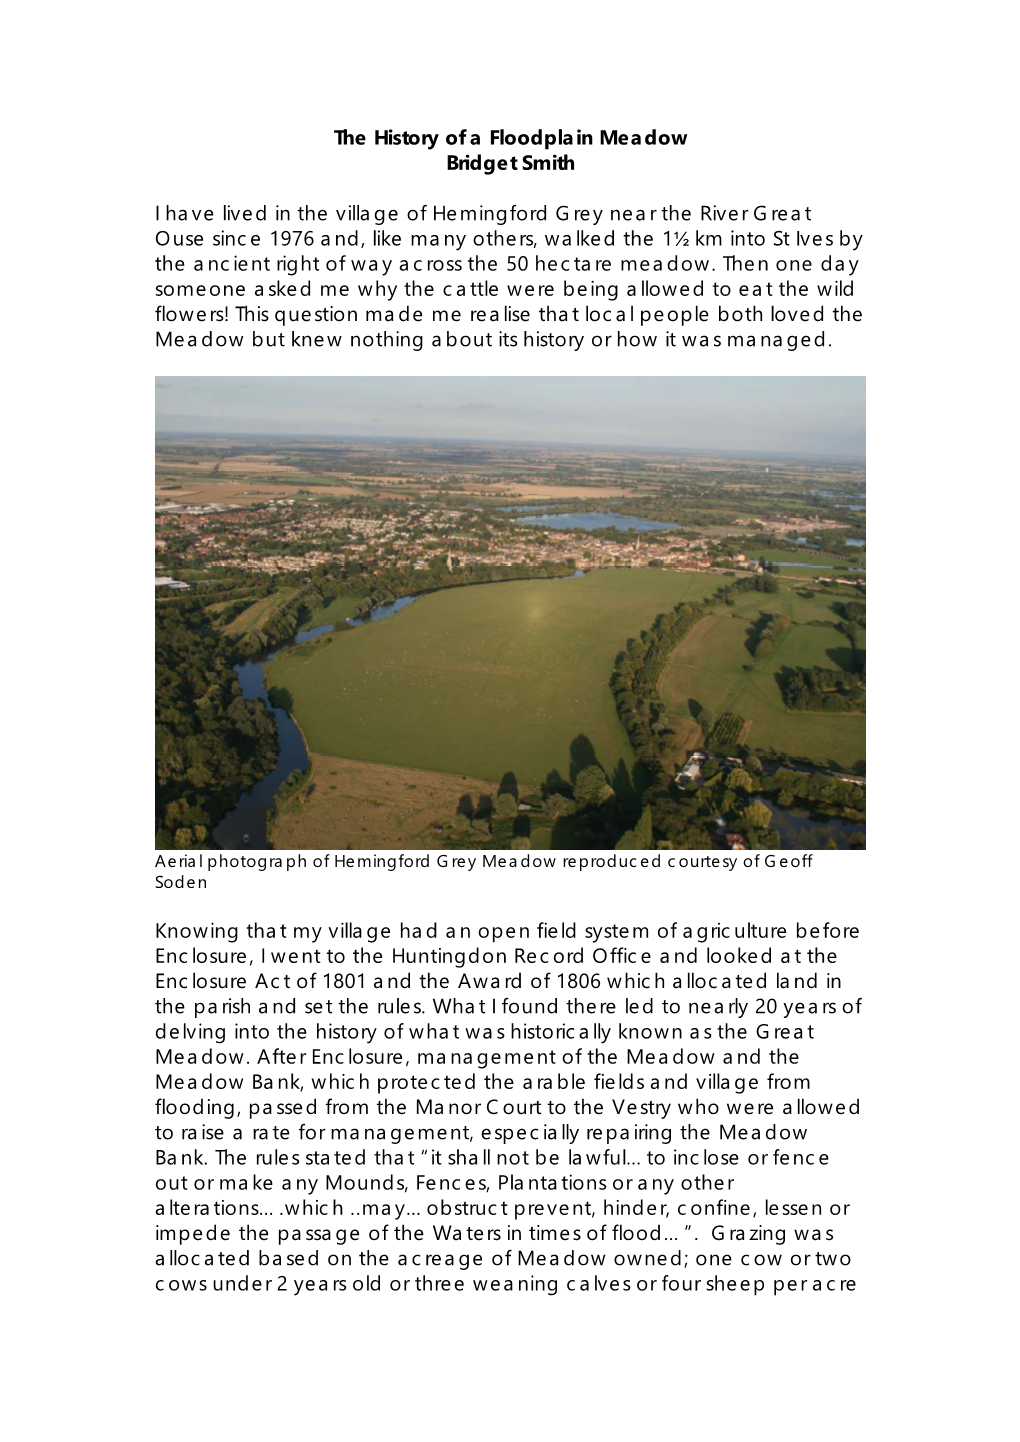 A History of Hemingford Grey Meadow by Bridget Smith